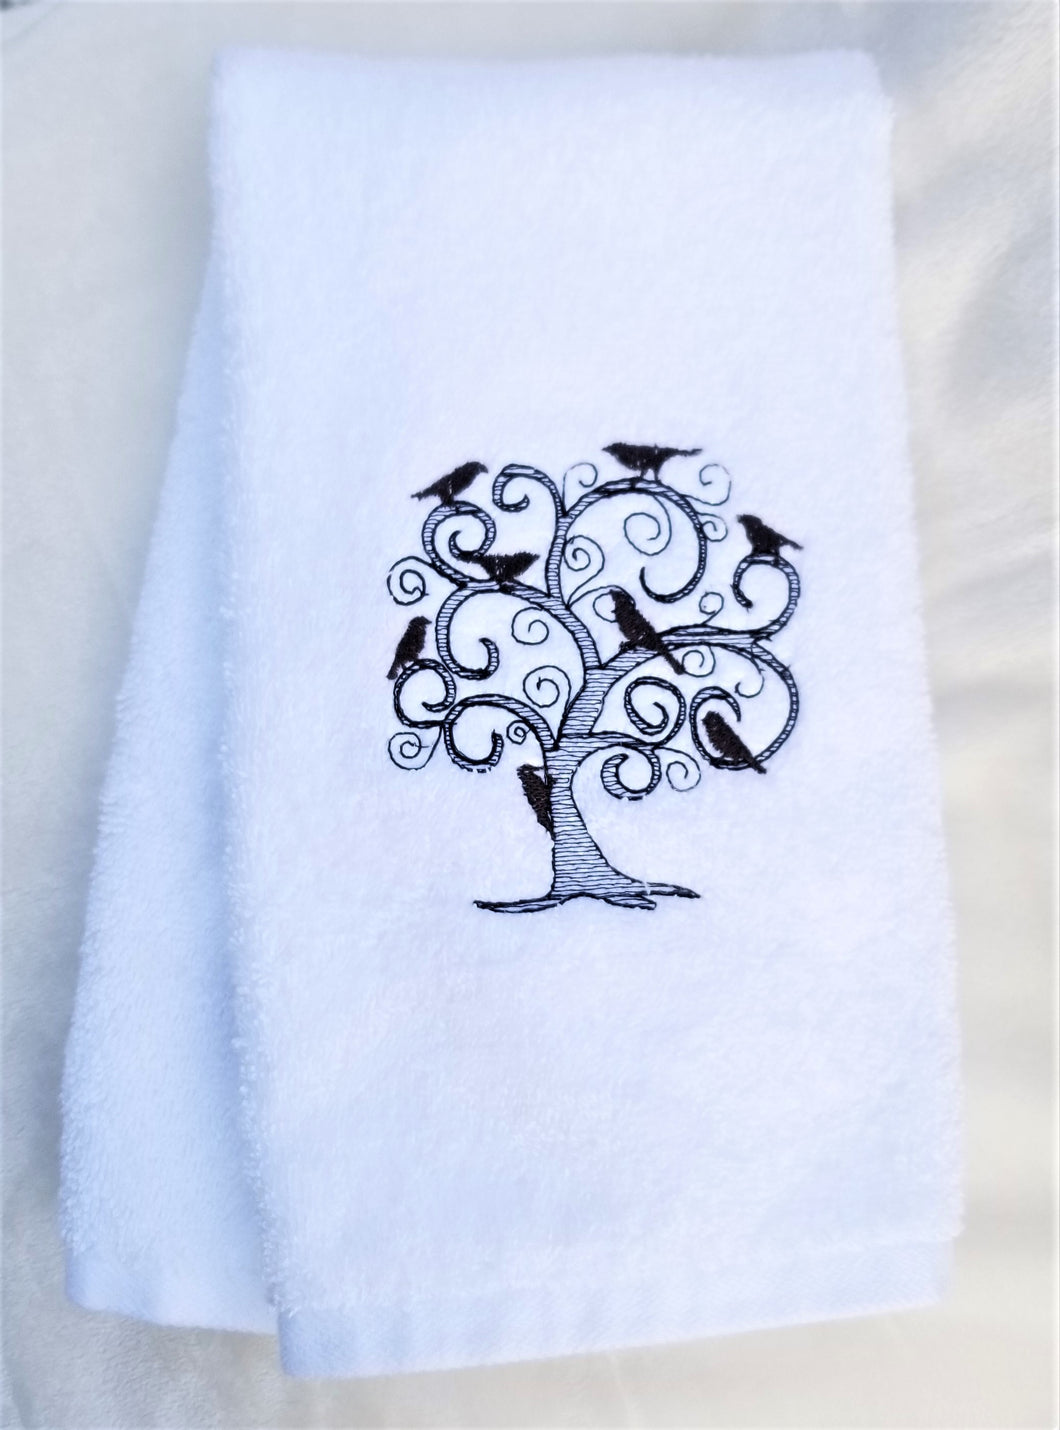 Halloween Hand Towel Custom Embroidered White Spa Towel